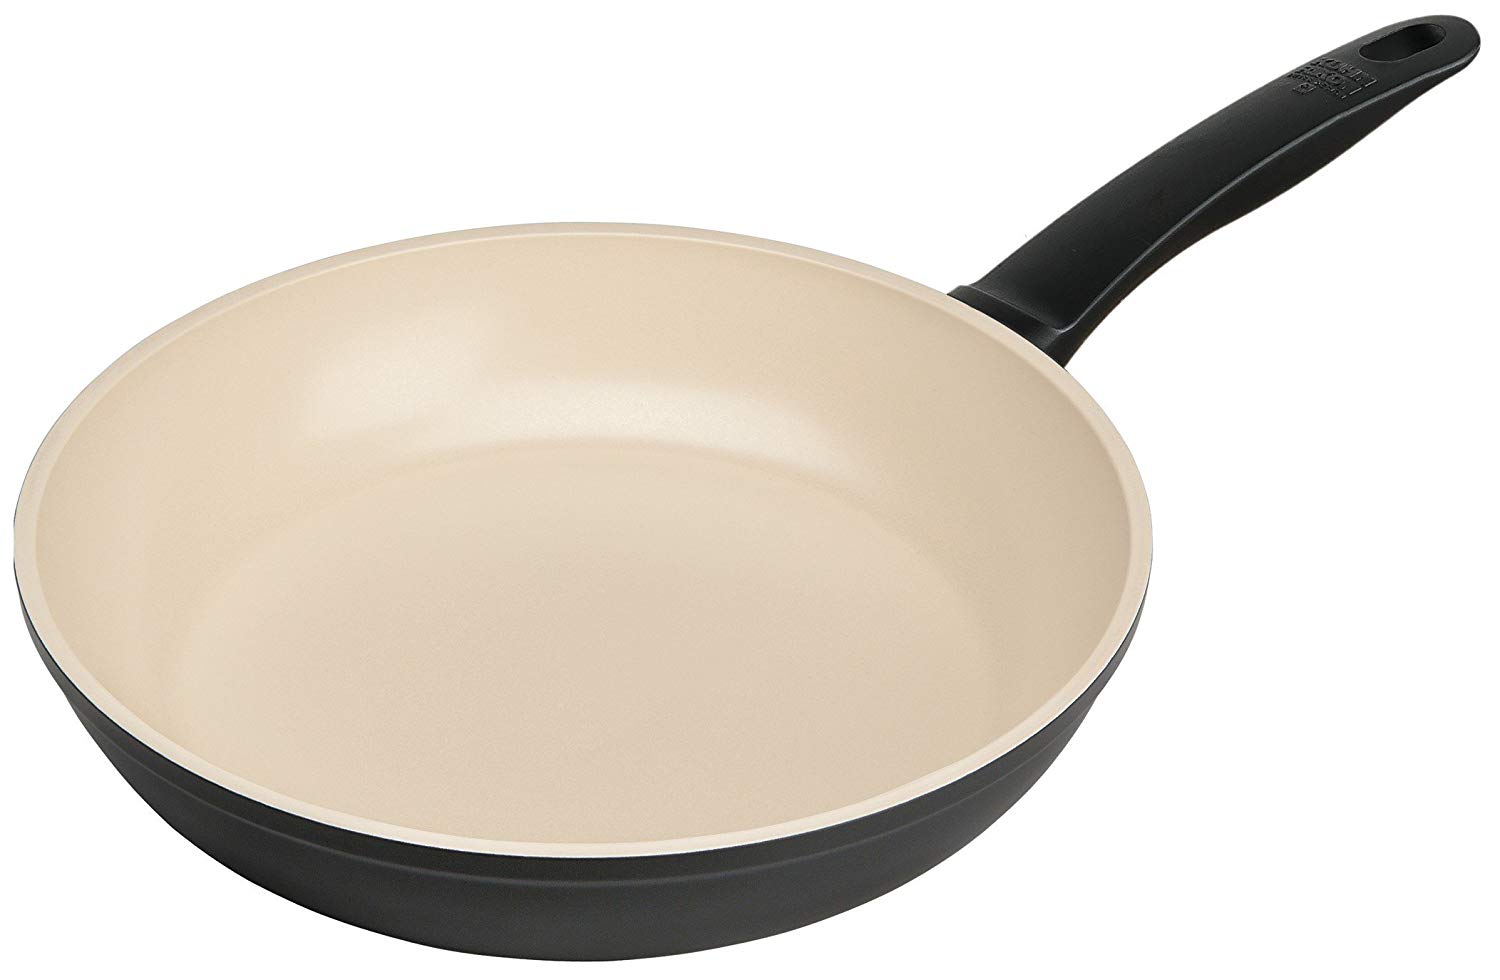 Kuhn Rikon 26 Cm Easy Ceramic Induction Frying Pan, Black